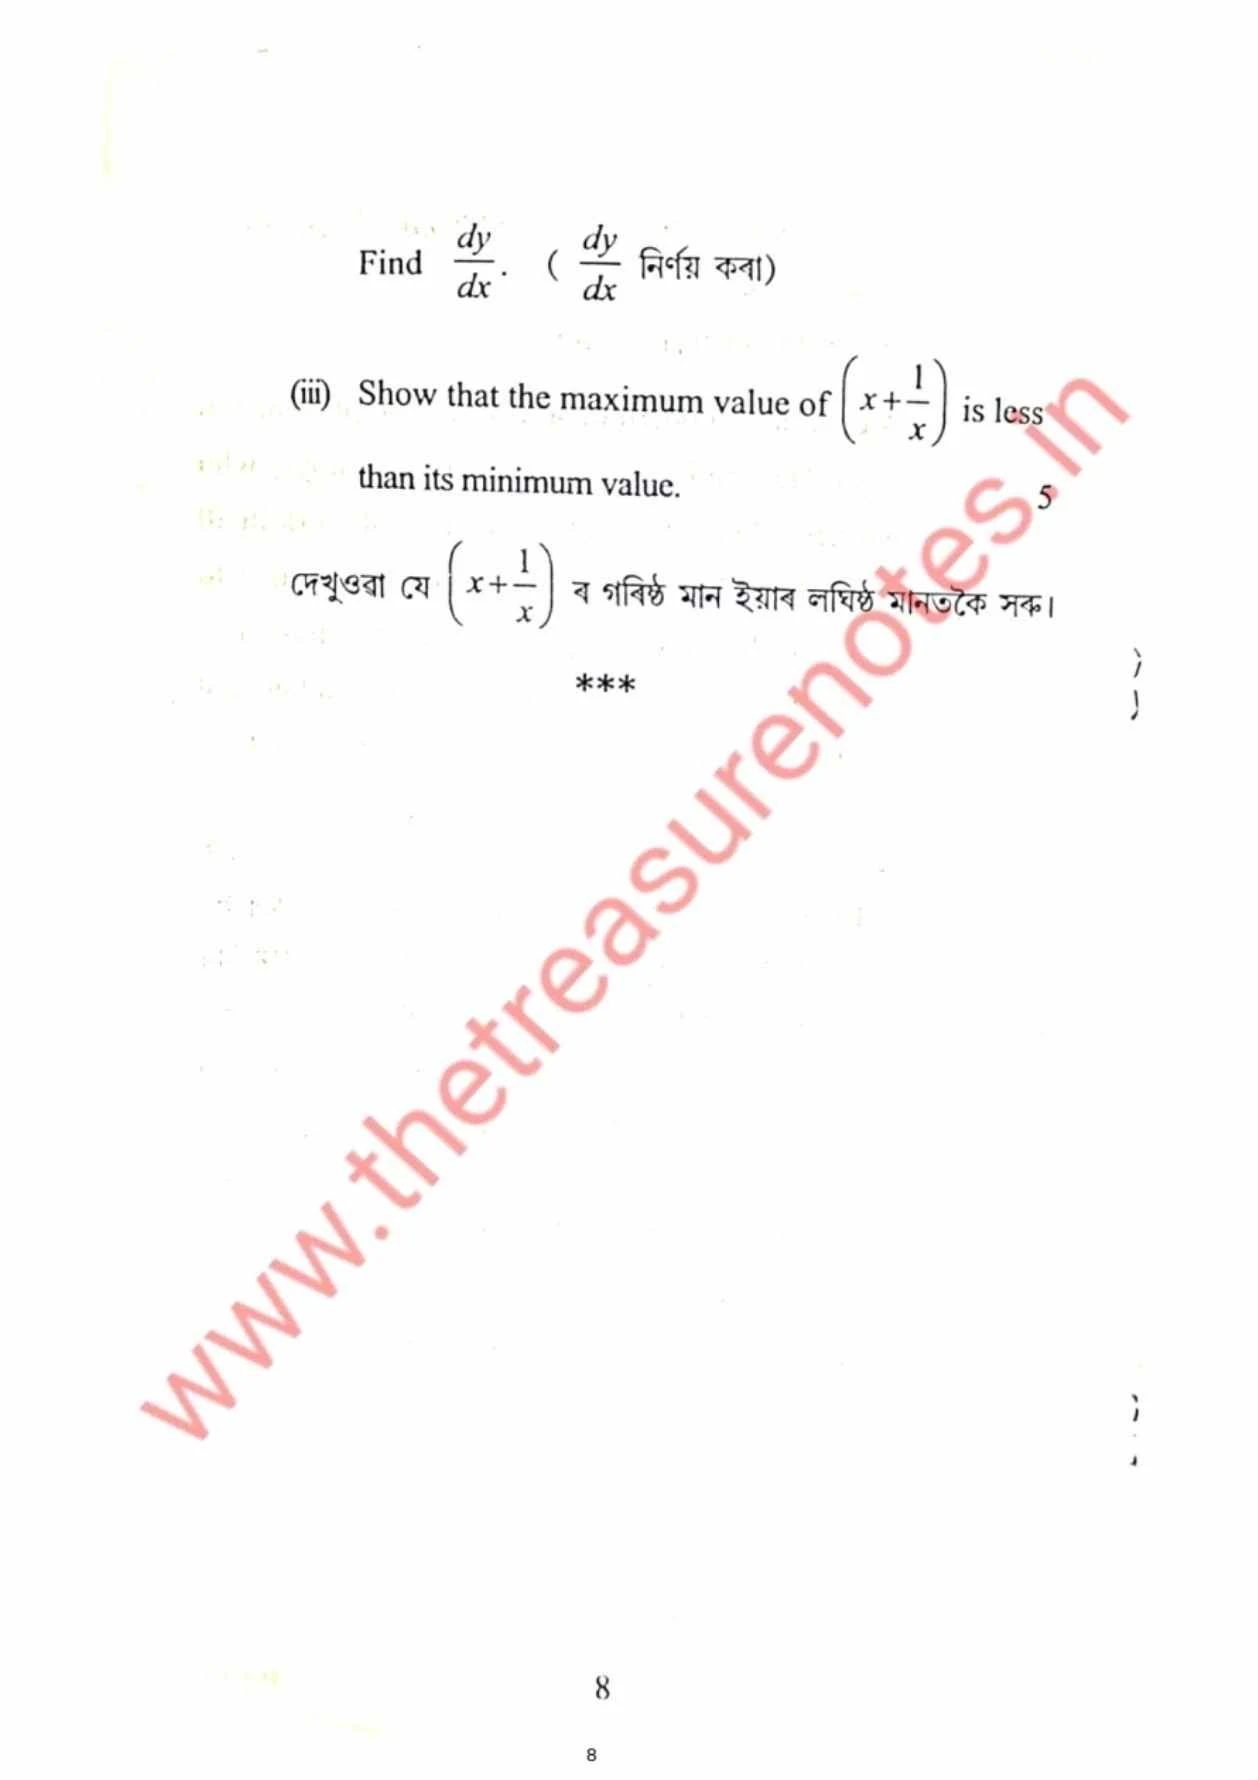 Business Mathematics Question Paper 2023 PDF [KCDCC, Gauhati  BCom 1st Sem FYUGP]